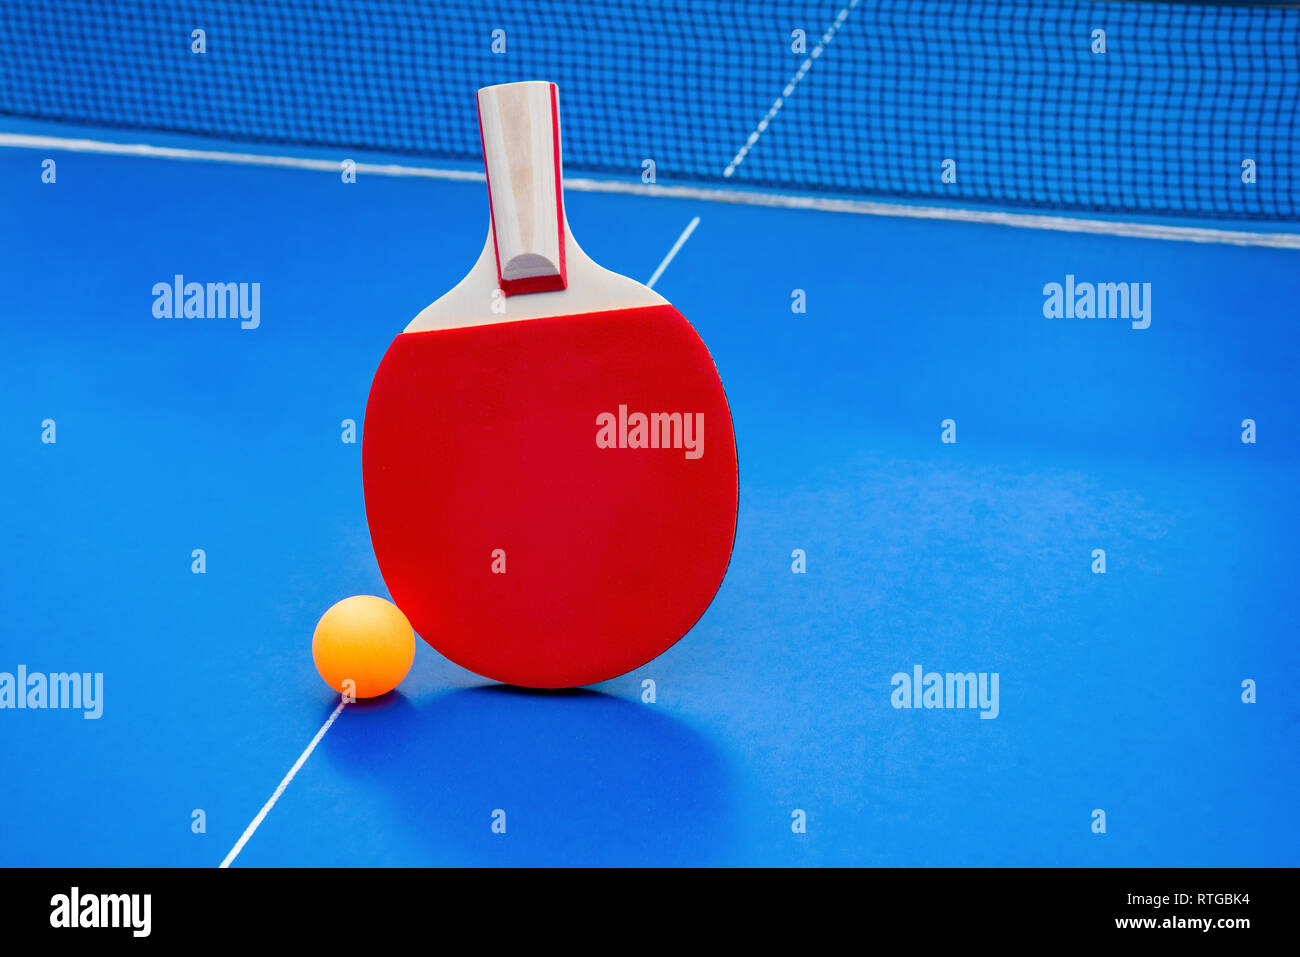 pingpong racket and ball and net on a blue pingpong table Stock Photo